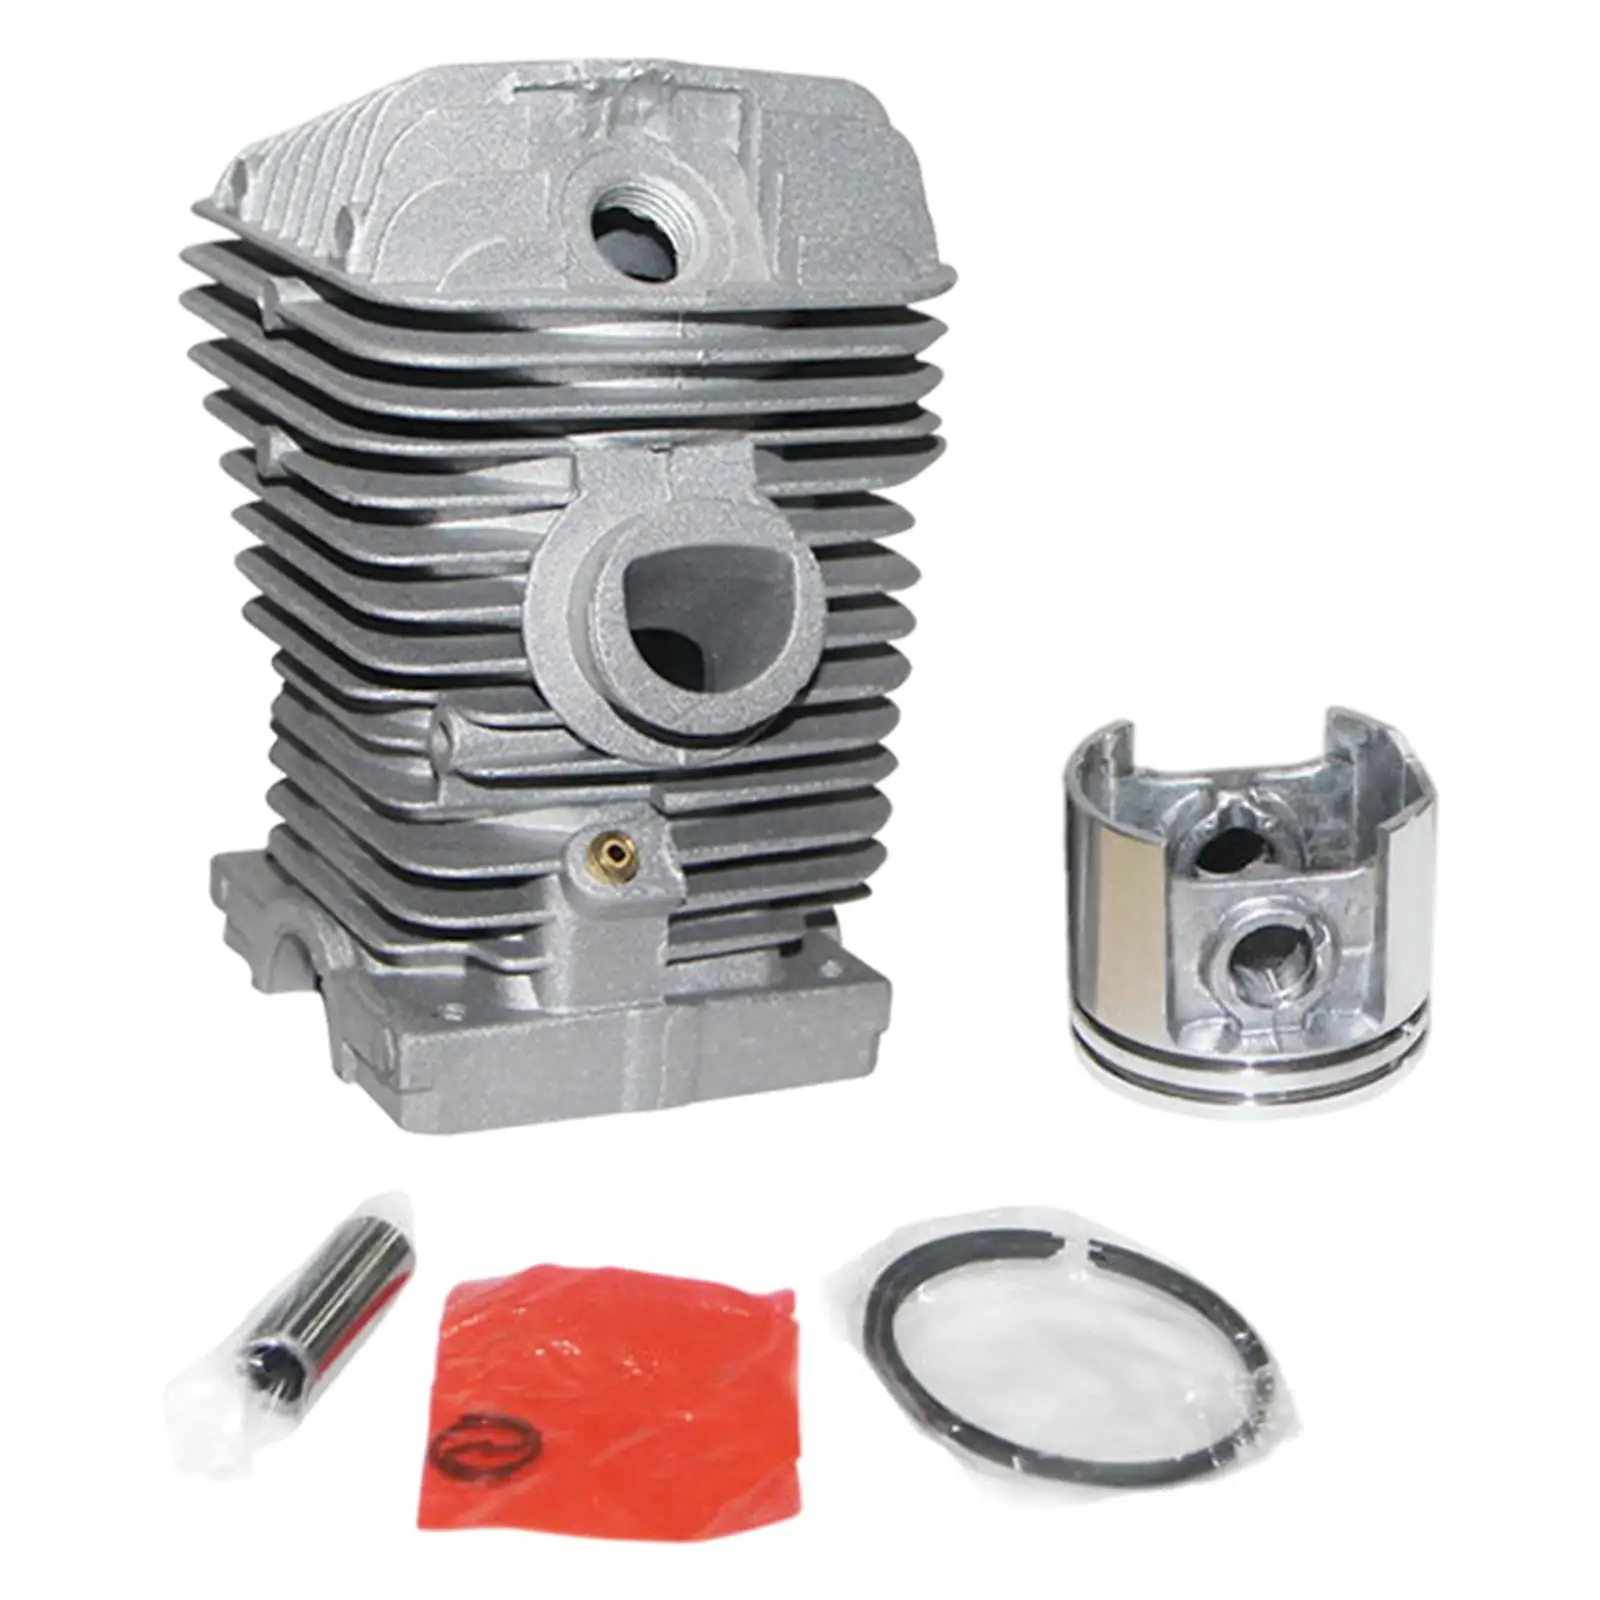 Complete Engine Motor Cylinder Crankshaft Pan Assembly For STIHL MS230/250 Gasoline Chainsaw Parts